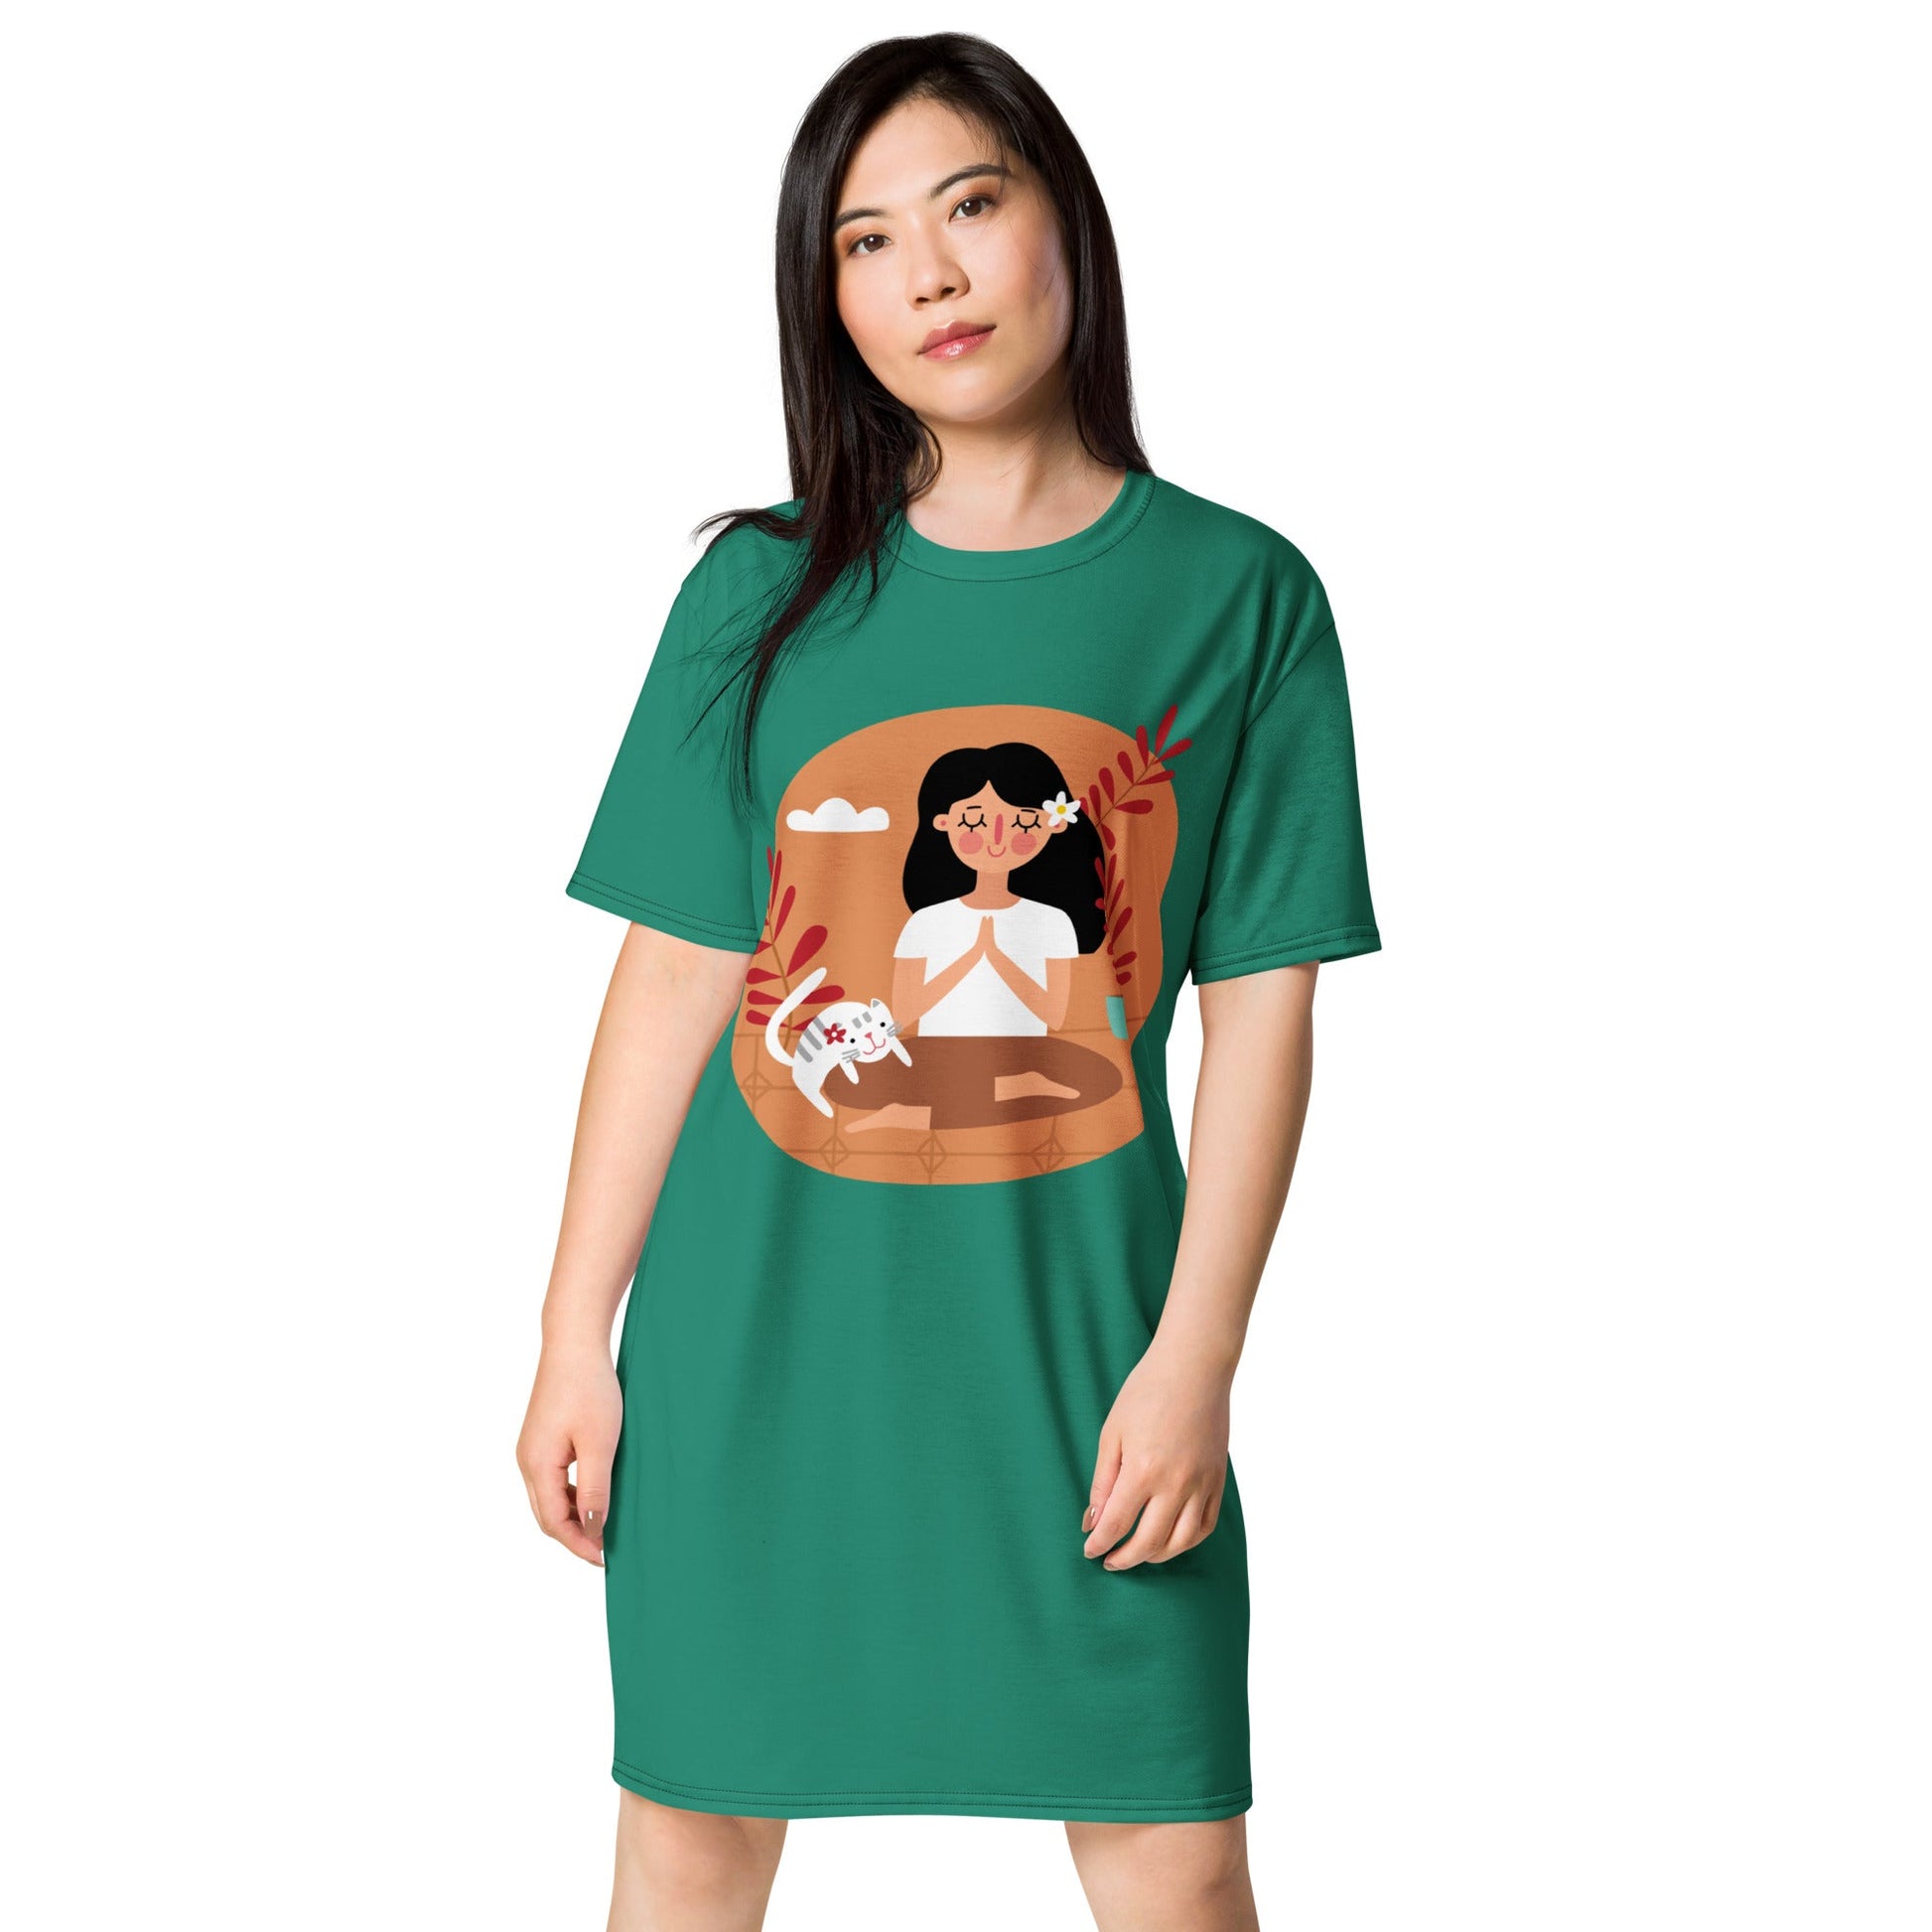 NEVER BE ALONE Women's T-shirt Dress - Bonotee